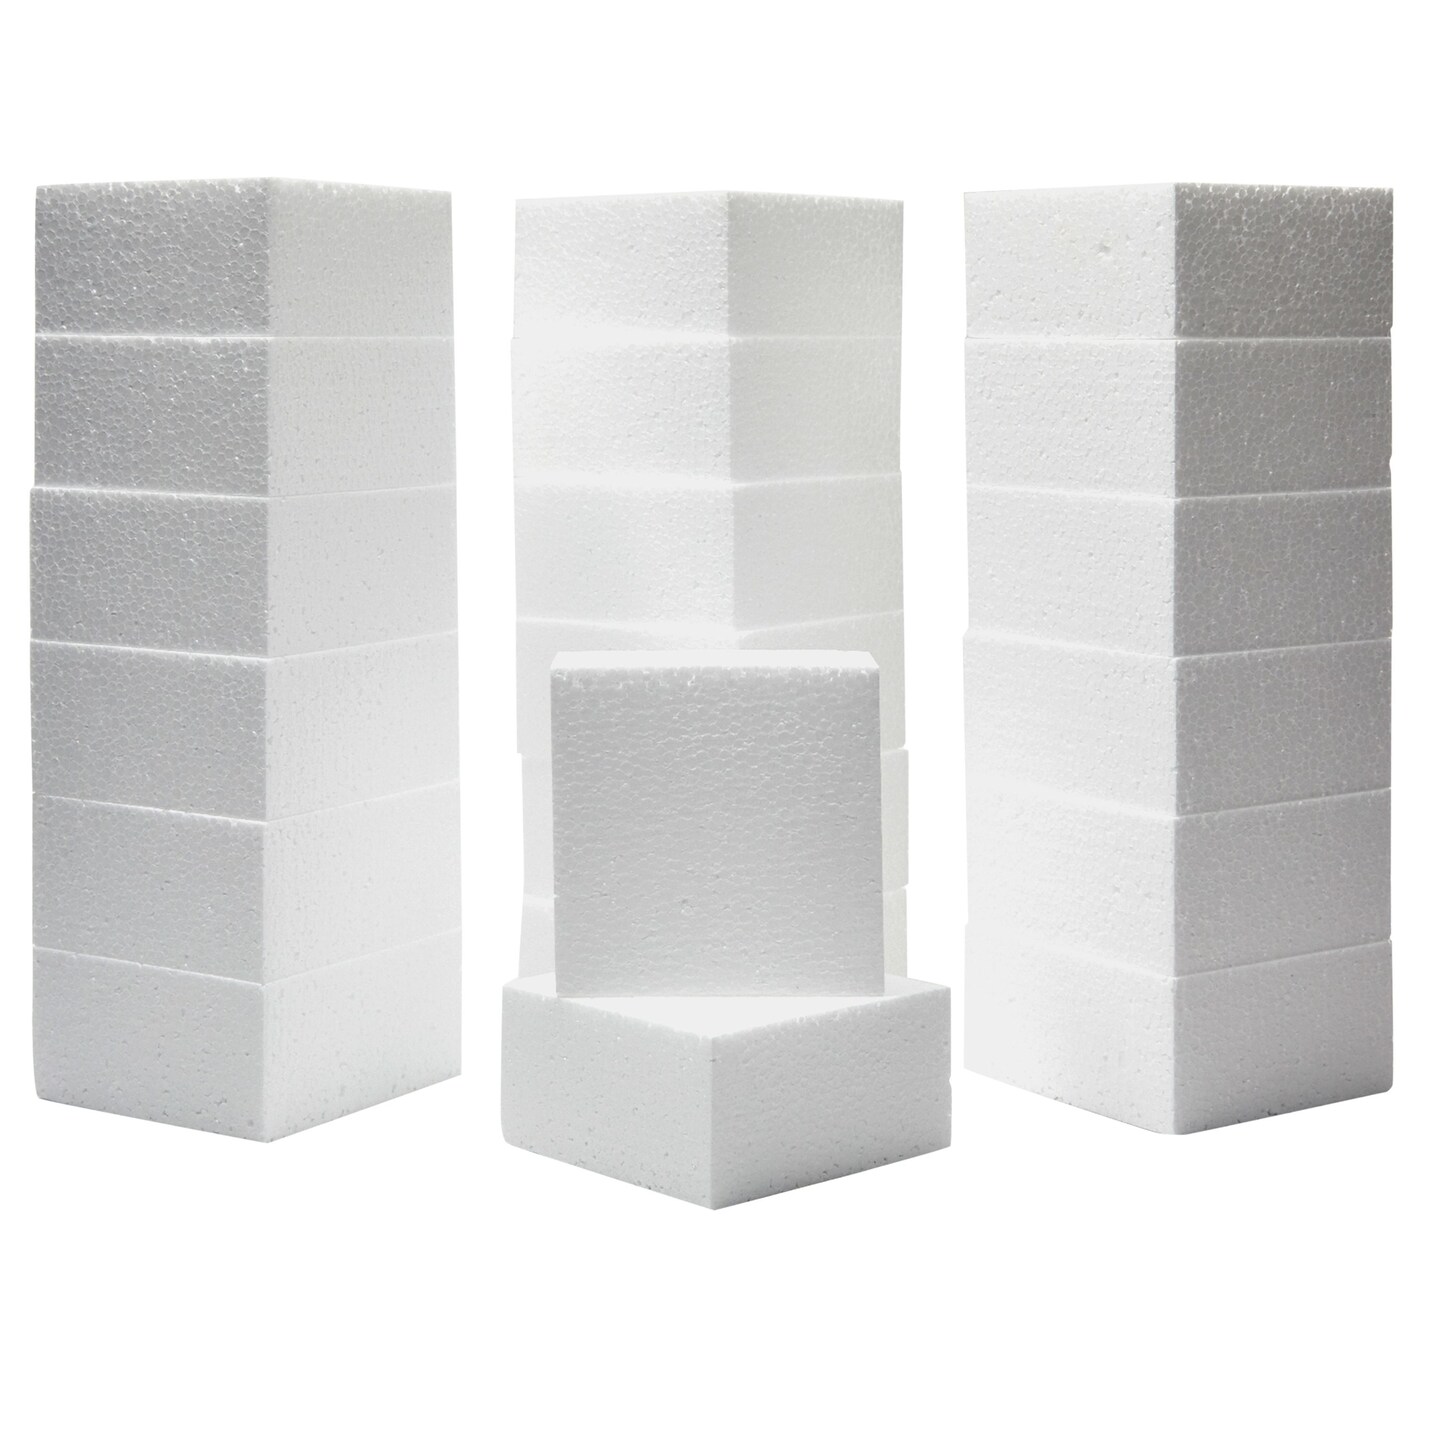 Giant Foam Block Set - 32 Pieces